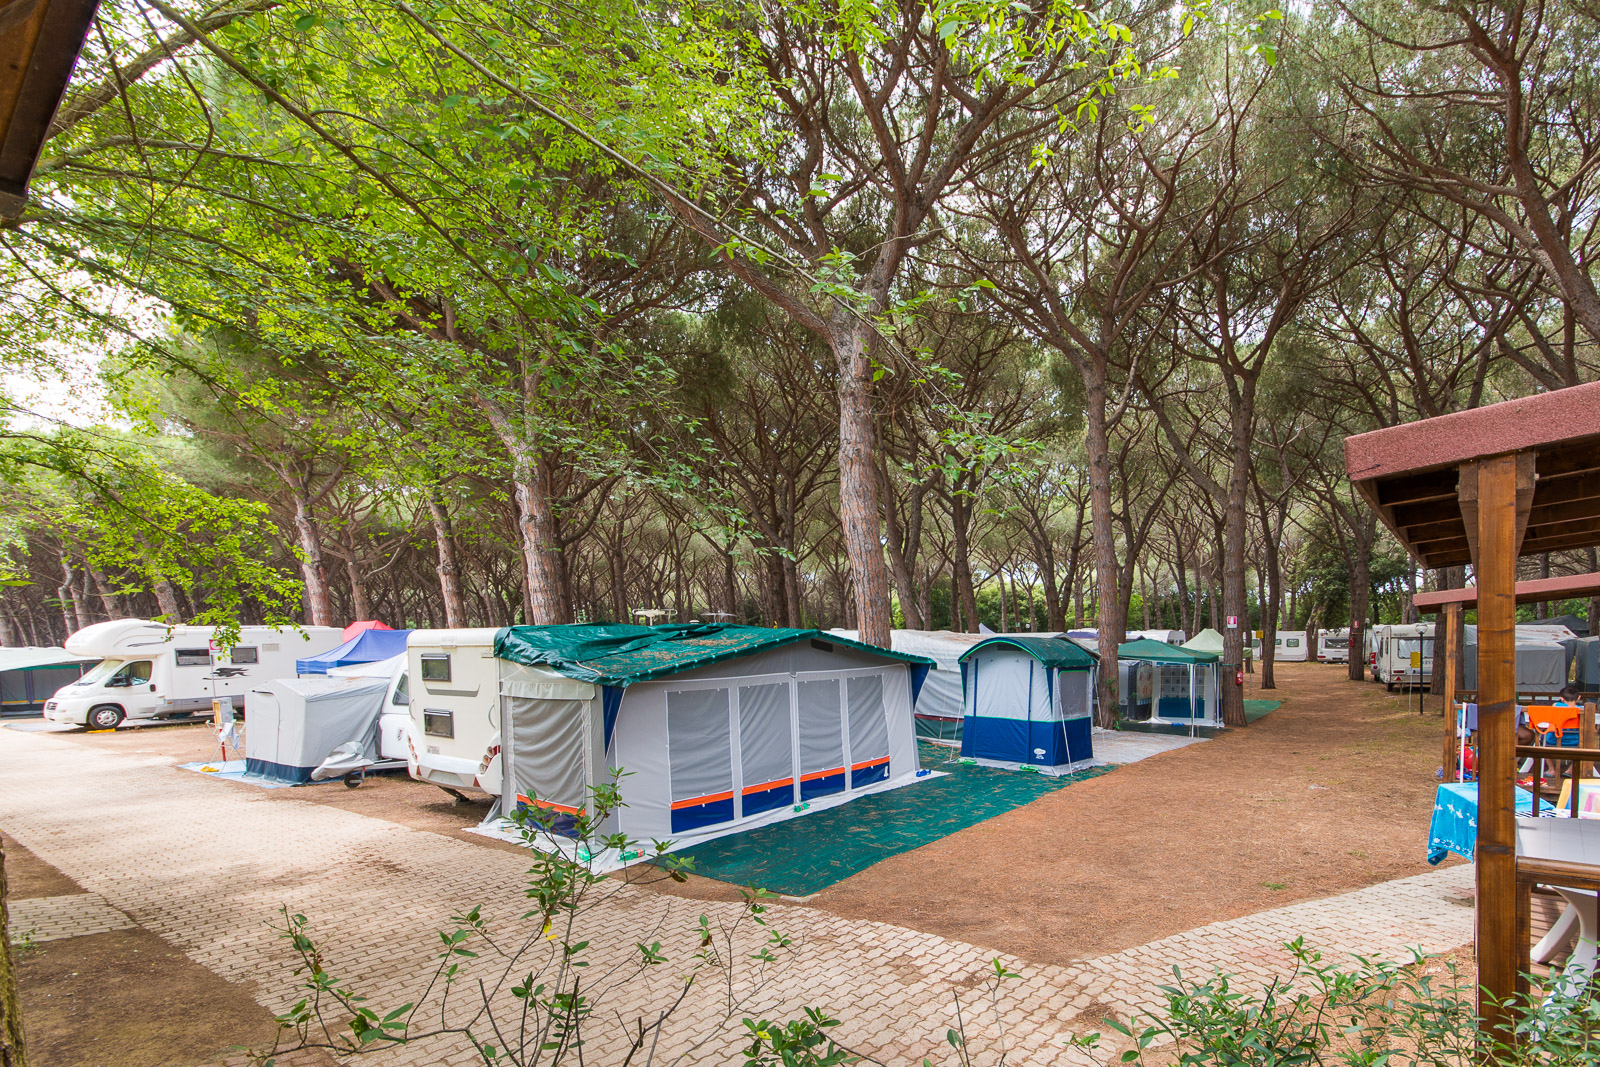 Camping platform. Paradise Marina Village кемпинг. Camping Pitch.